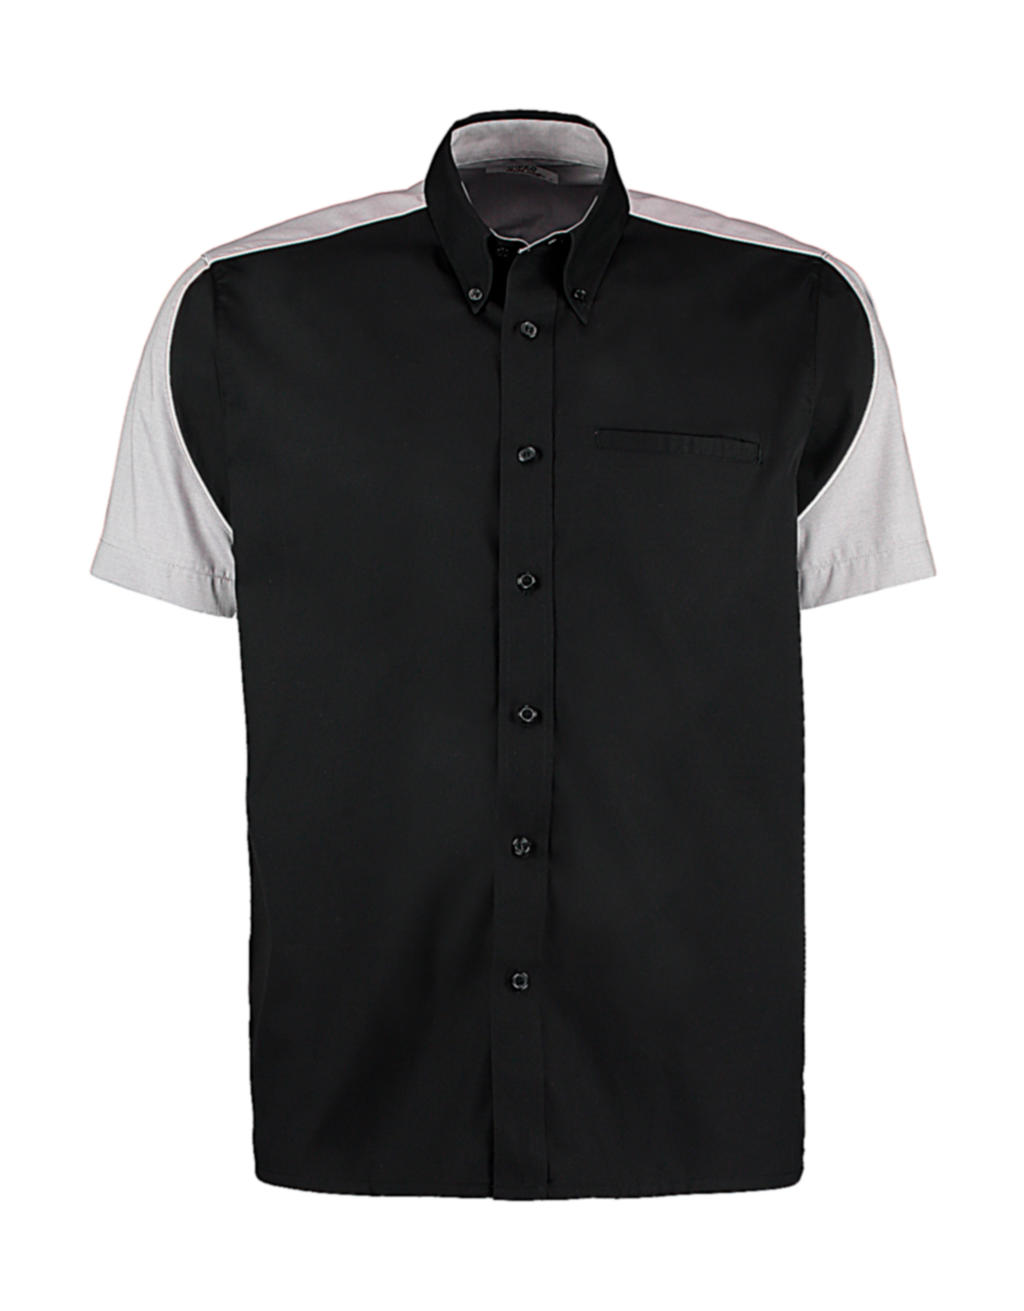  Classic Fit Sebring Shirt SSL in Farbe Black/Silver/White